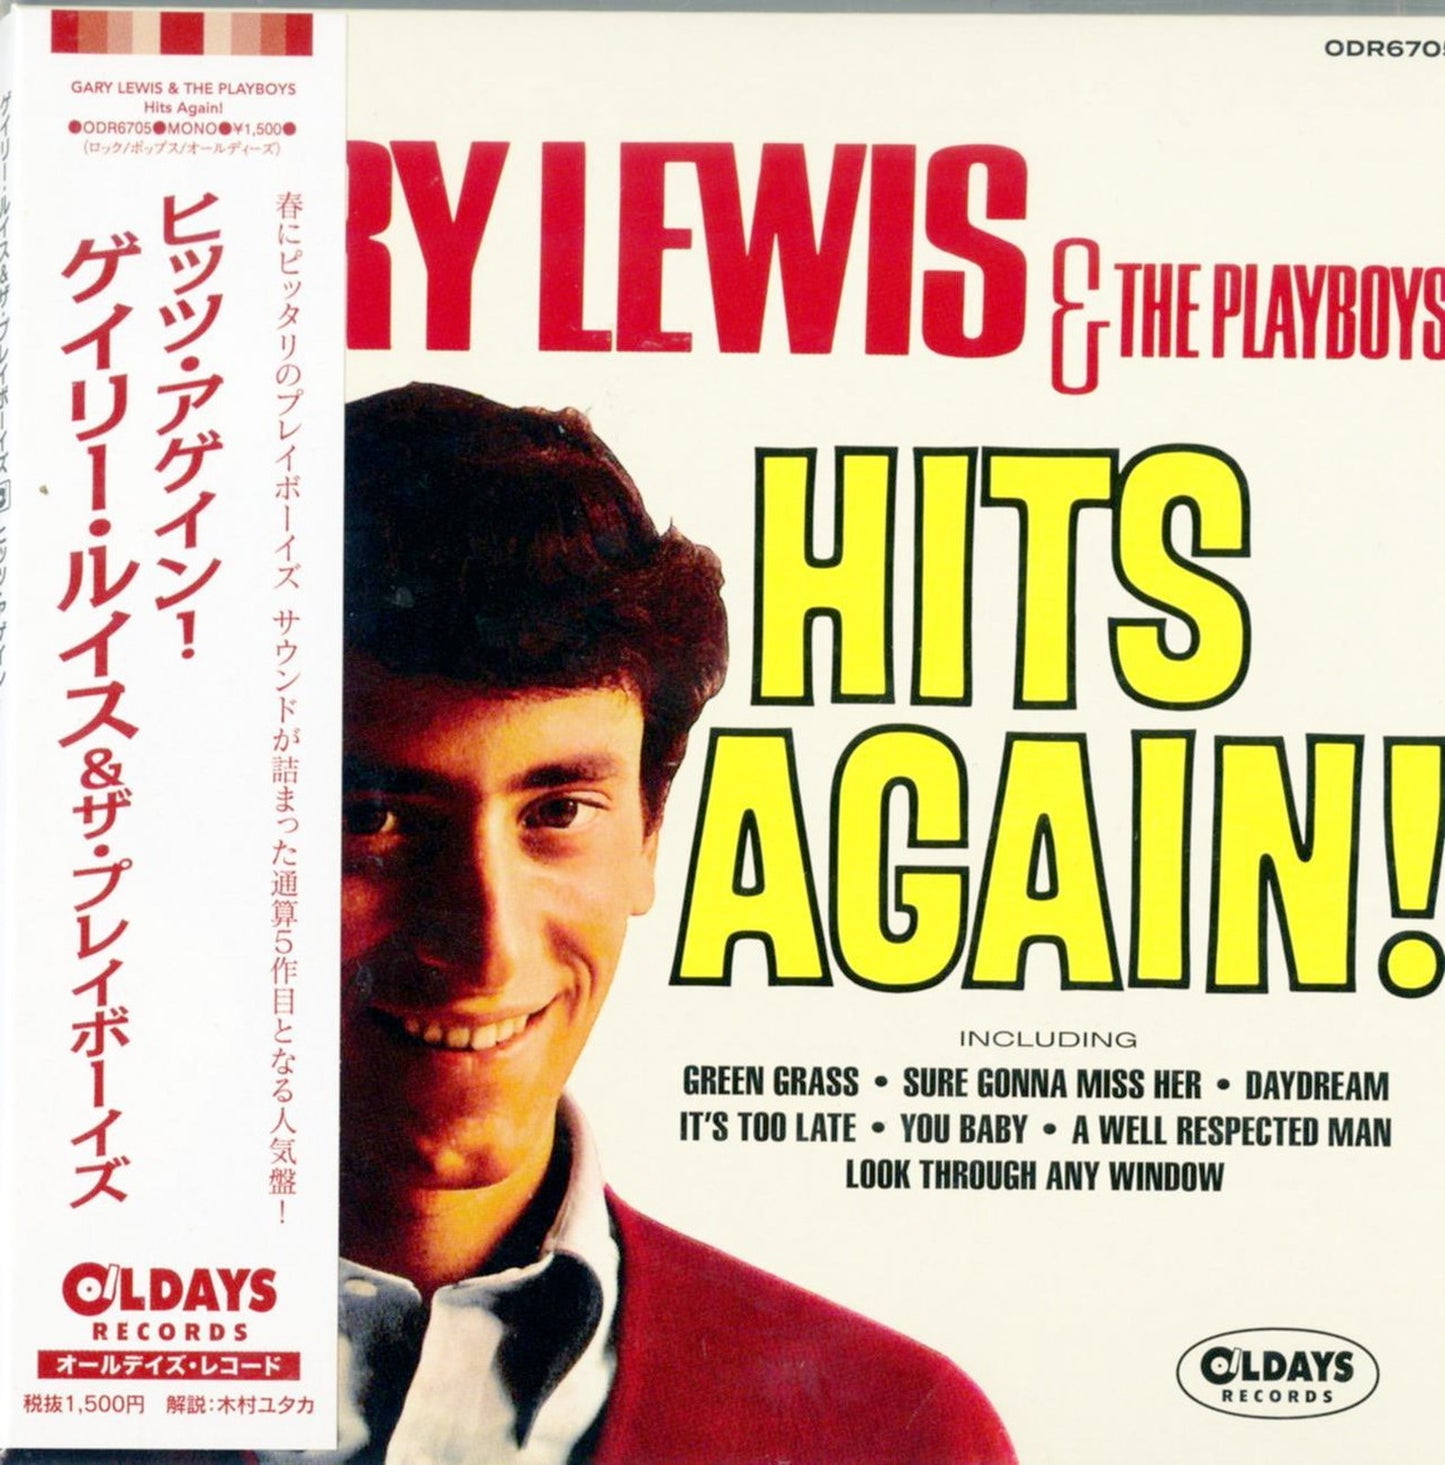 Gary Lewis & The Playboys - Hits Again! - Japan  Mini LP CD Bonus Track